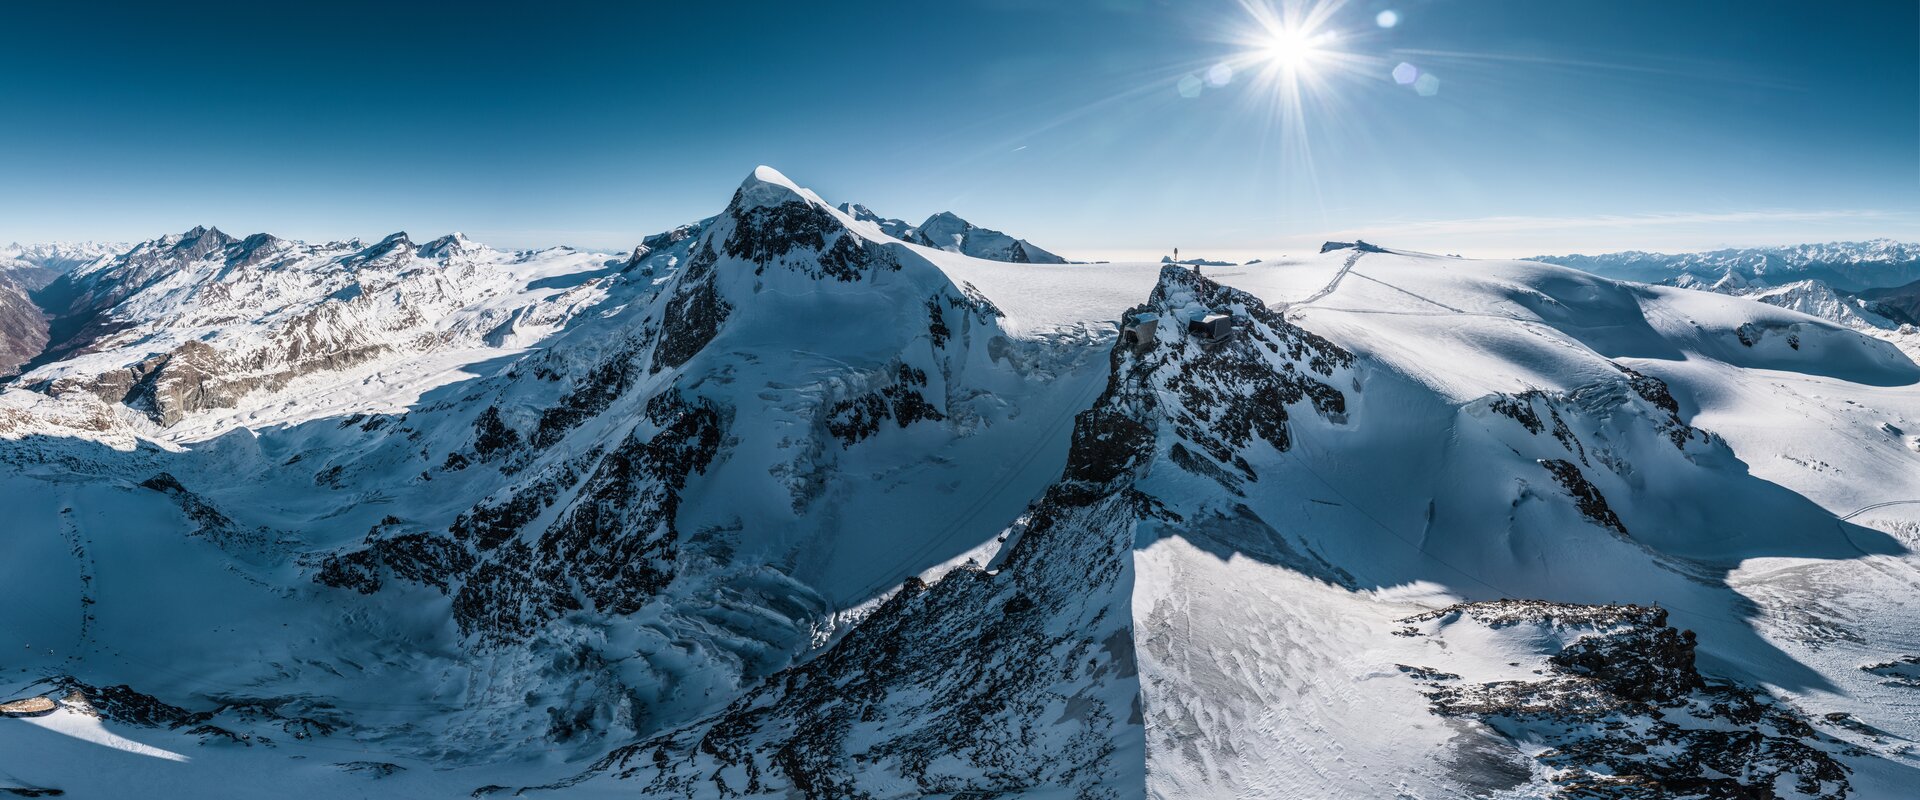 mountain panorama at the Matterhorn Glacier Paradise